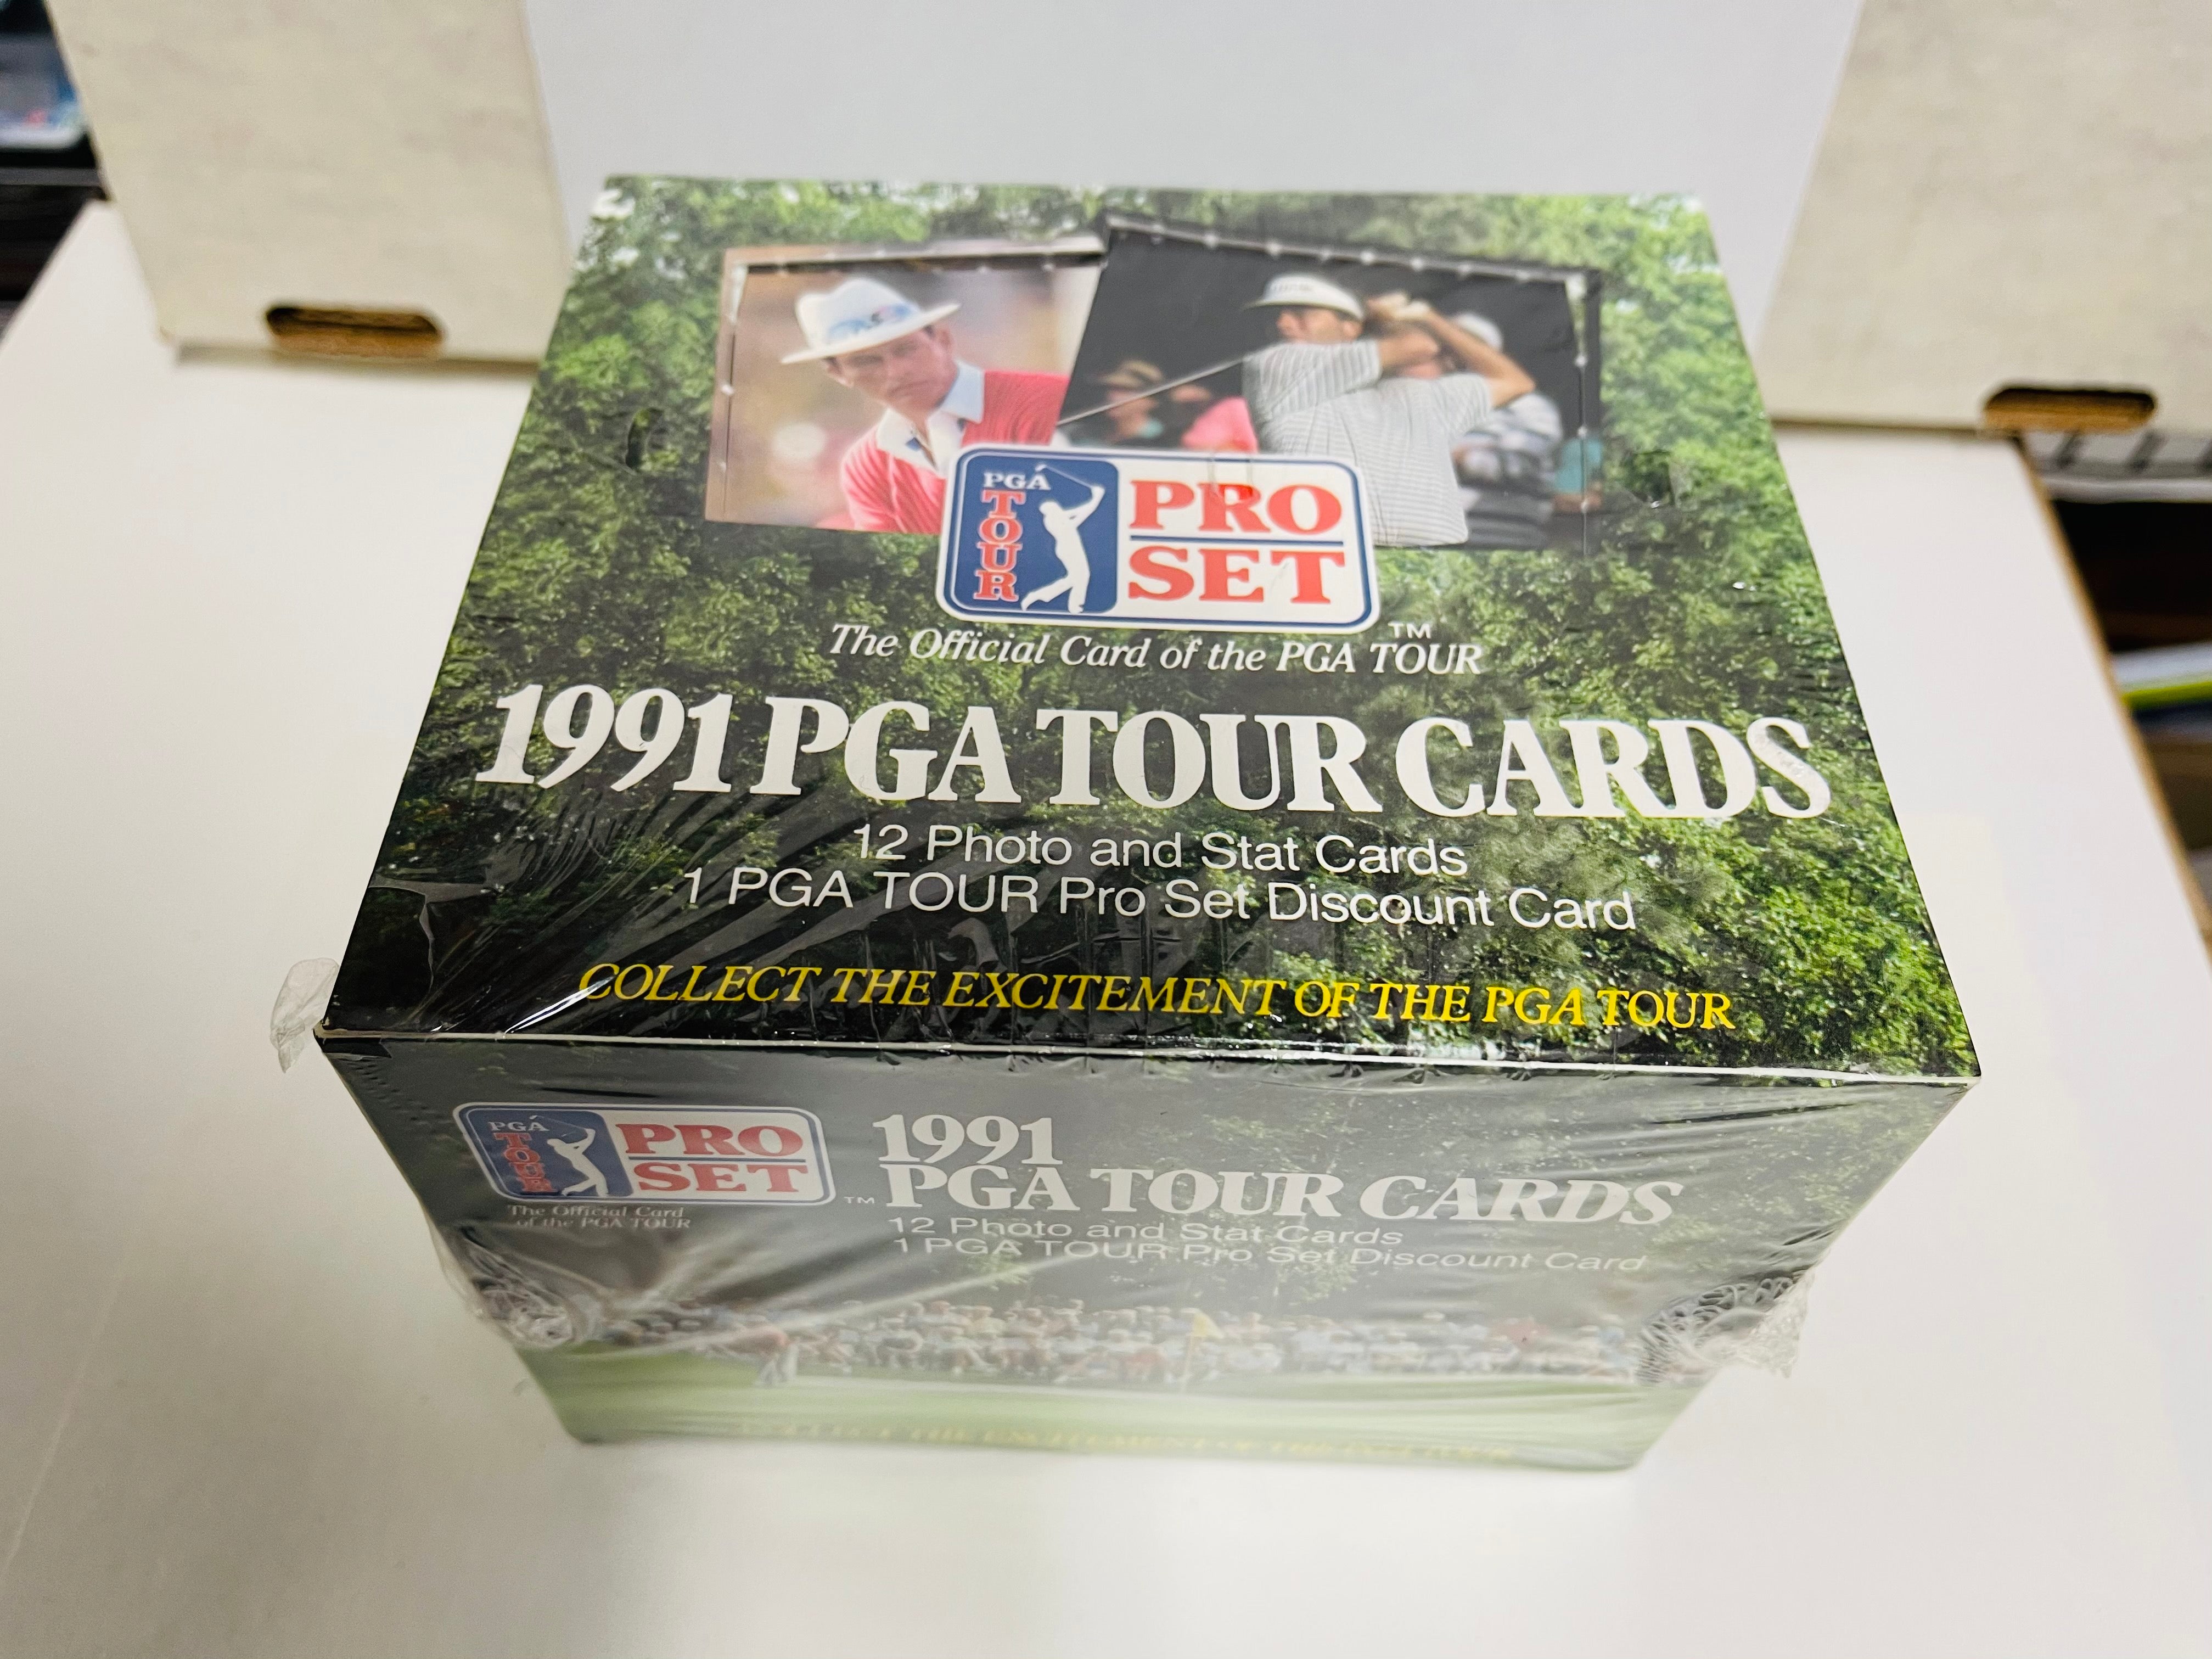 PGA Proset Golf cards 36 packs factory sealed box 1991